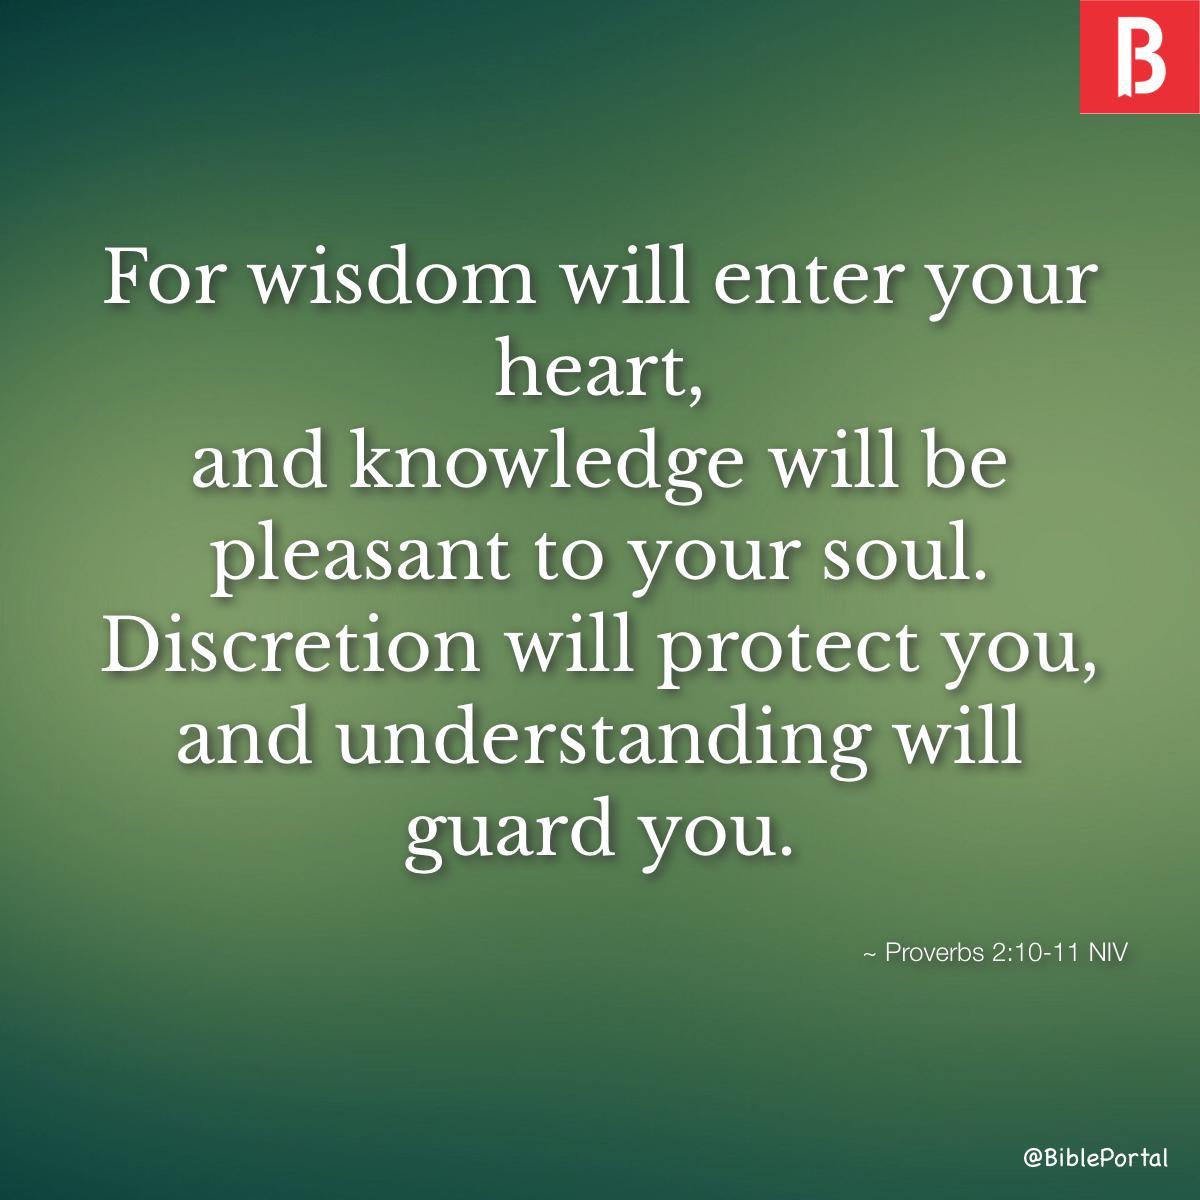 Proverbs 2:10-11 NIV